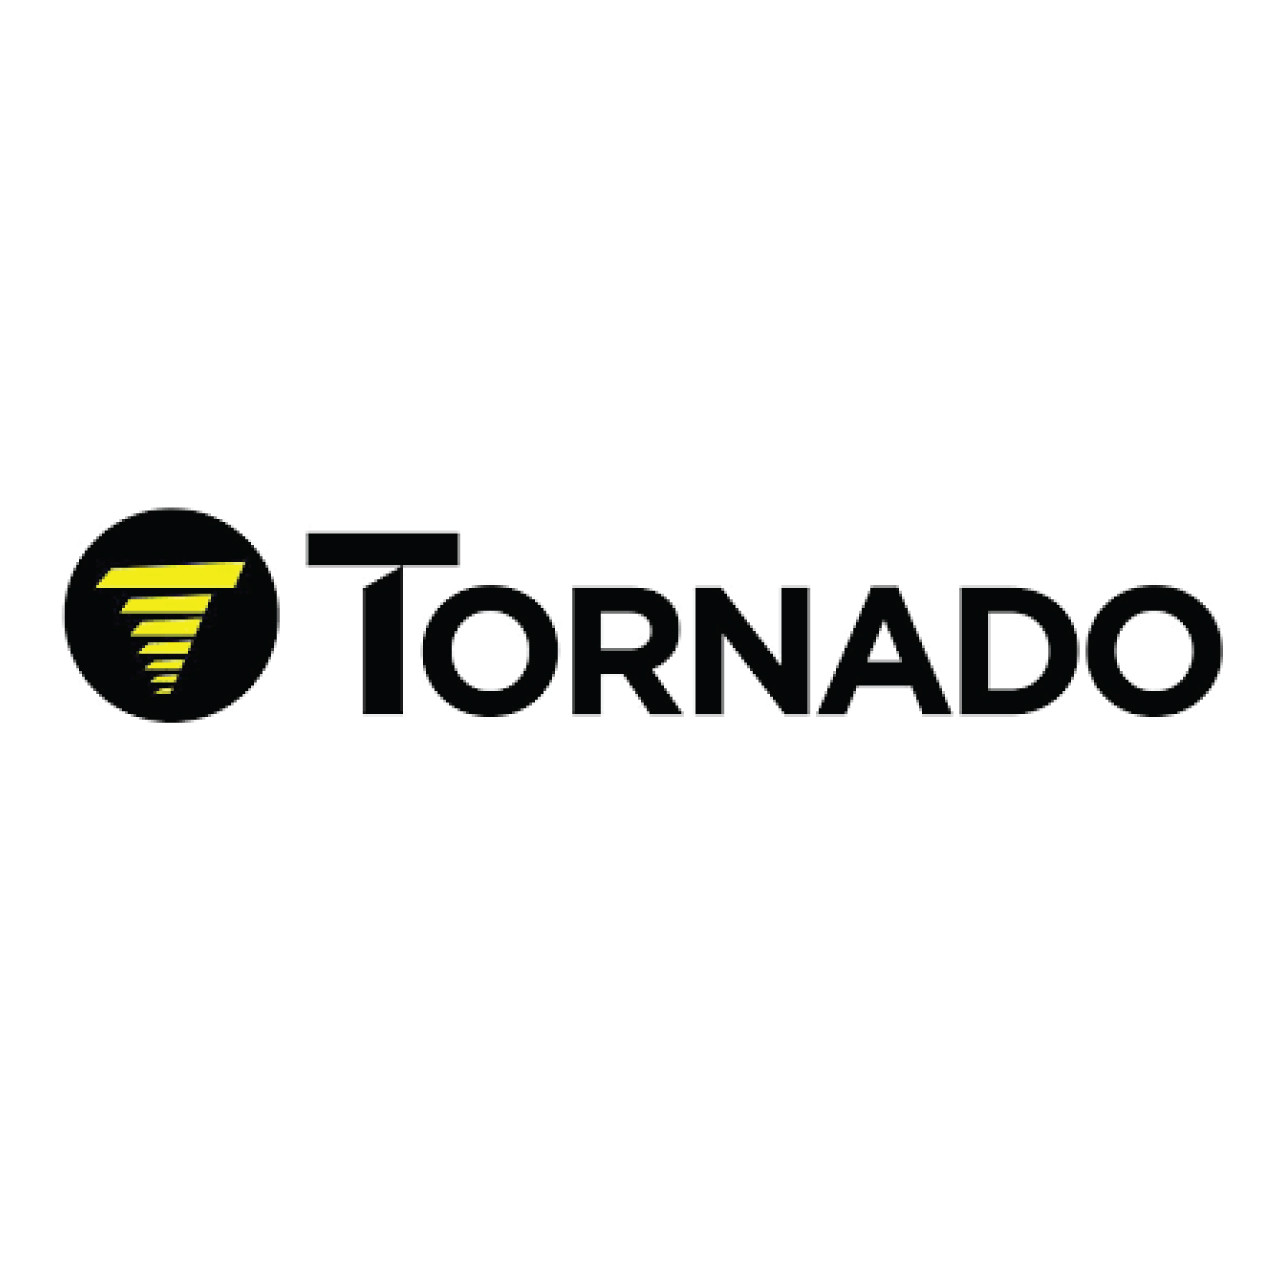 00-0500-0501, Tornado 00-0500-0501, Tornado WASHER, M5 FLAT ZINC CIMEX, Tornado parts